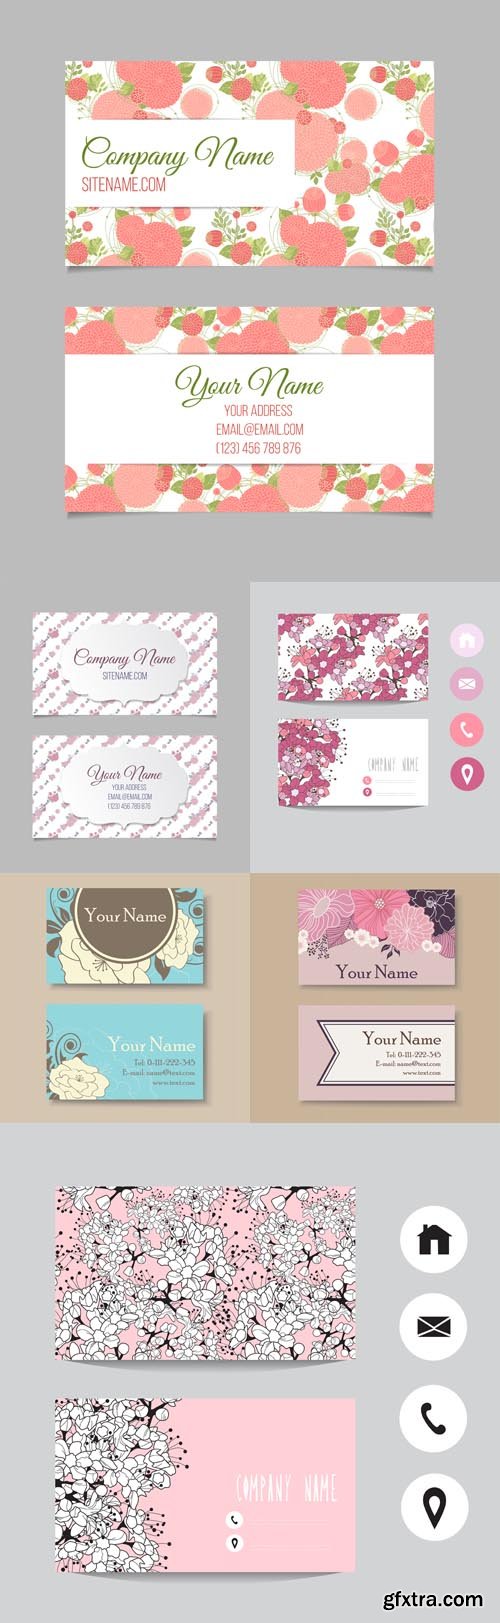 6 Beautiful Floral Business Card Templates